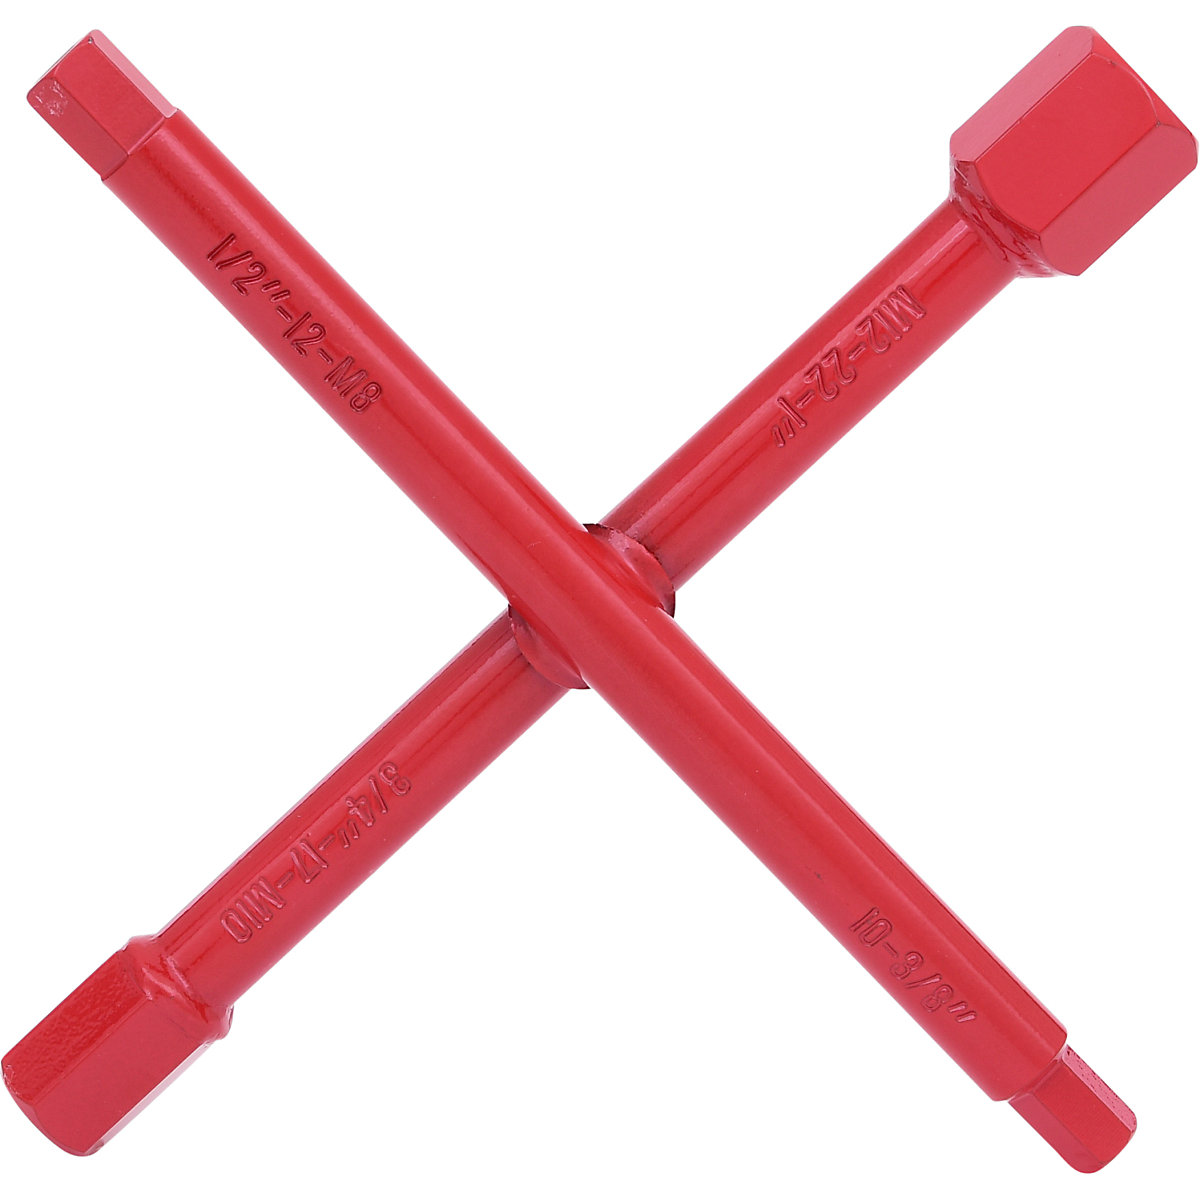 Cheie in cruce pentru instalații sanitare – KS Tools (Imagine produs 2)-1